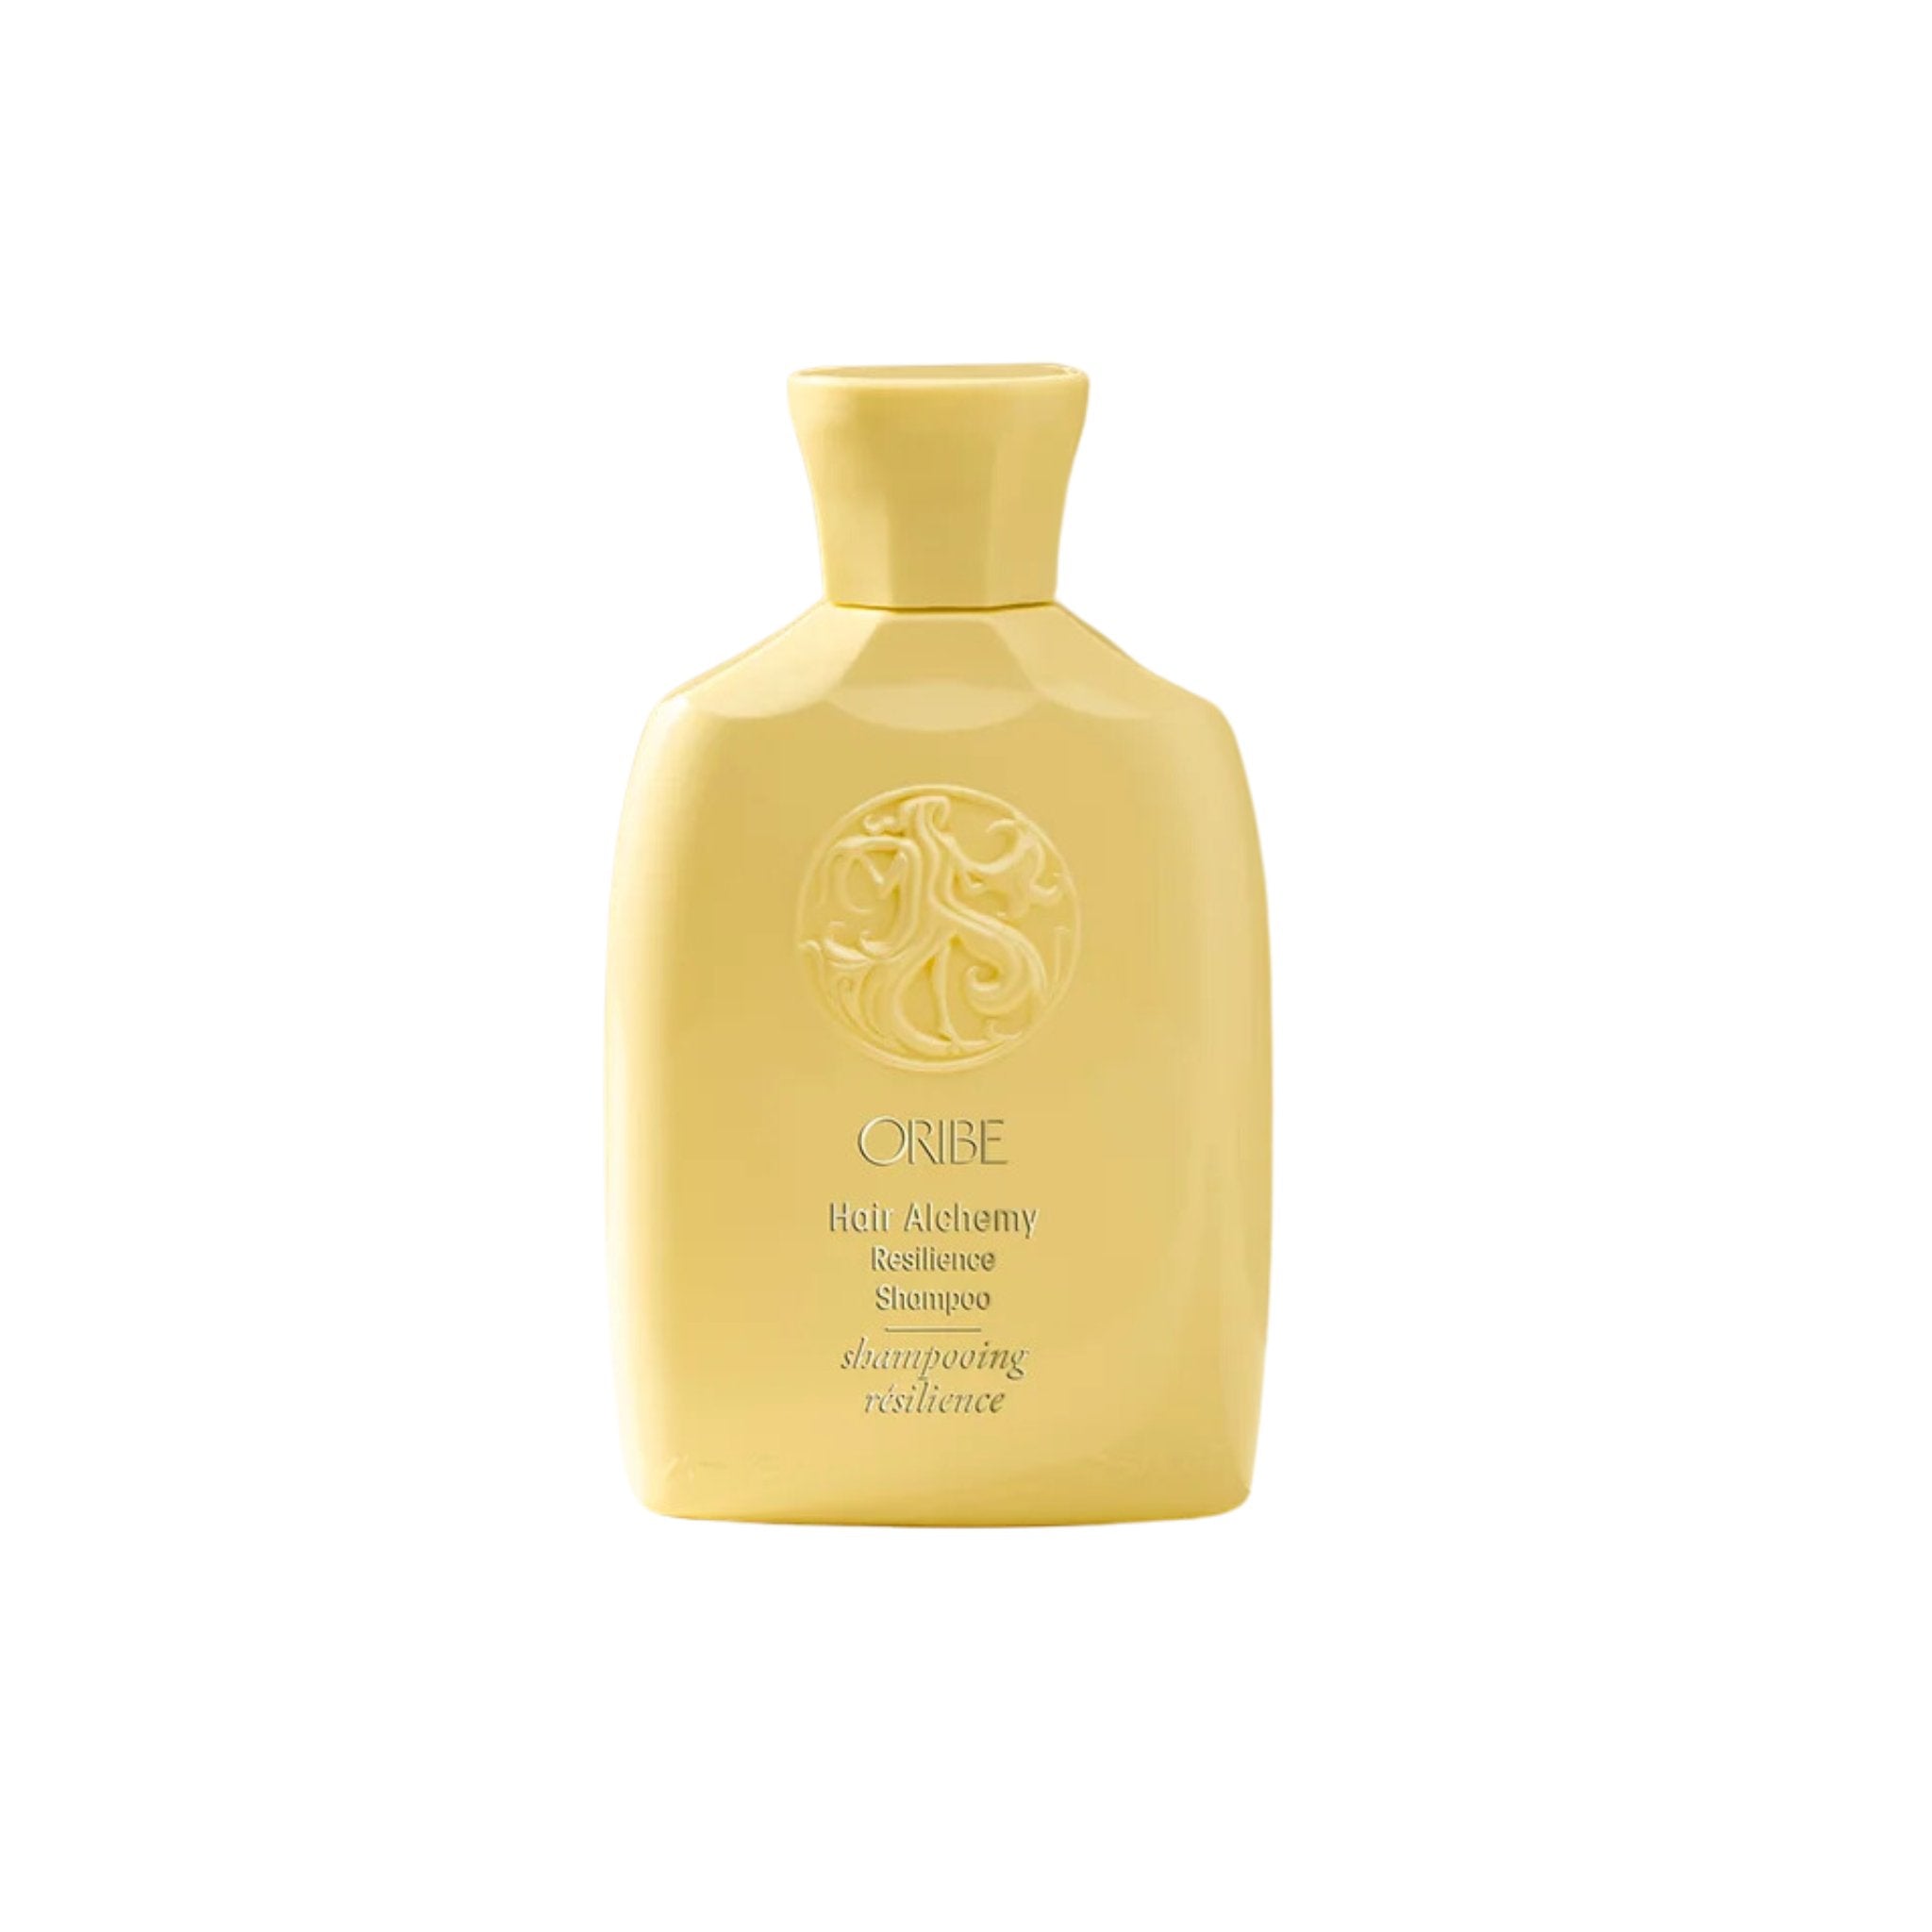 Oribe. Shampoing Résilience Hair Alchemy - 75 ml - Concept C. Shop